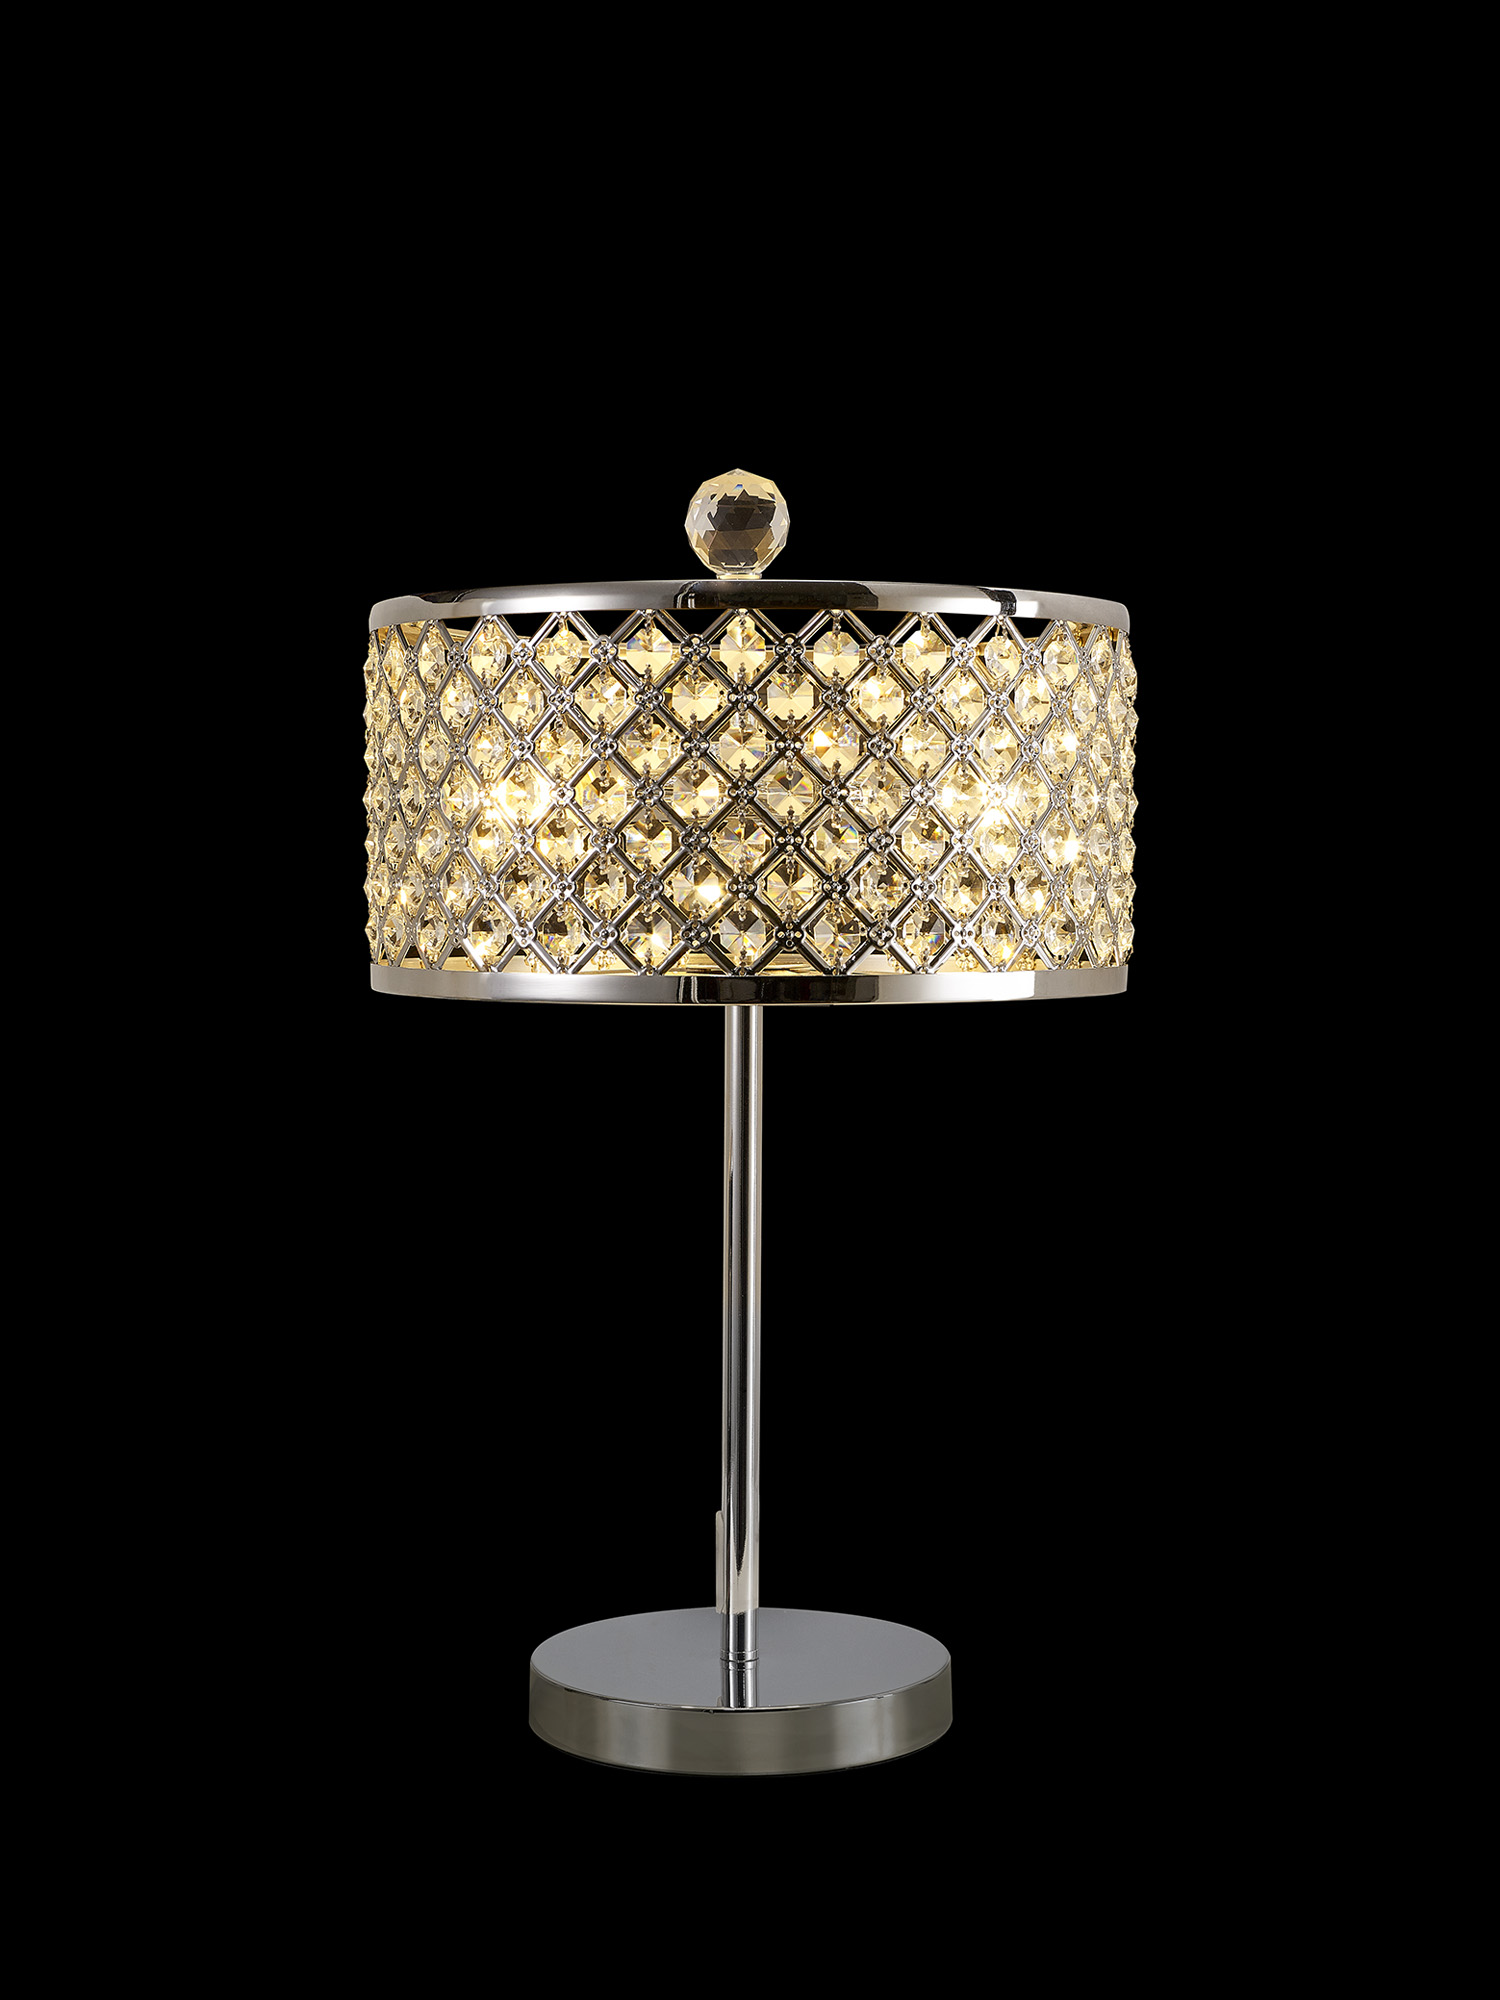 Sasha Crystal Table Lamps Deco Shaded Table Lamps